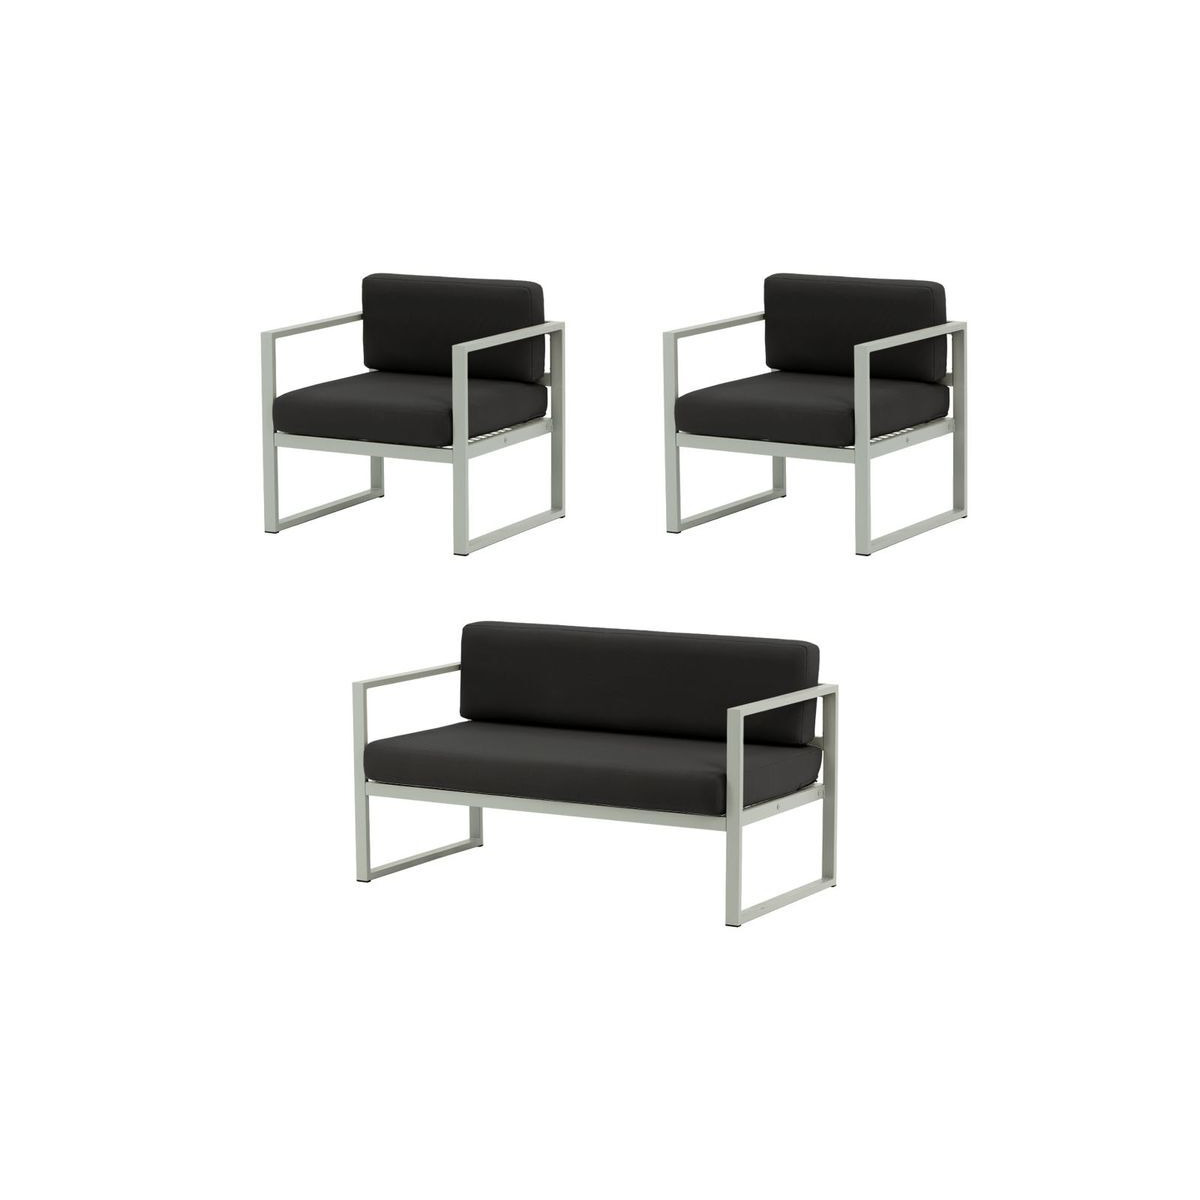 Sunset 3-piece garden furniture set A, black, Leg colour: grey steel